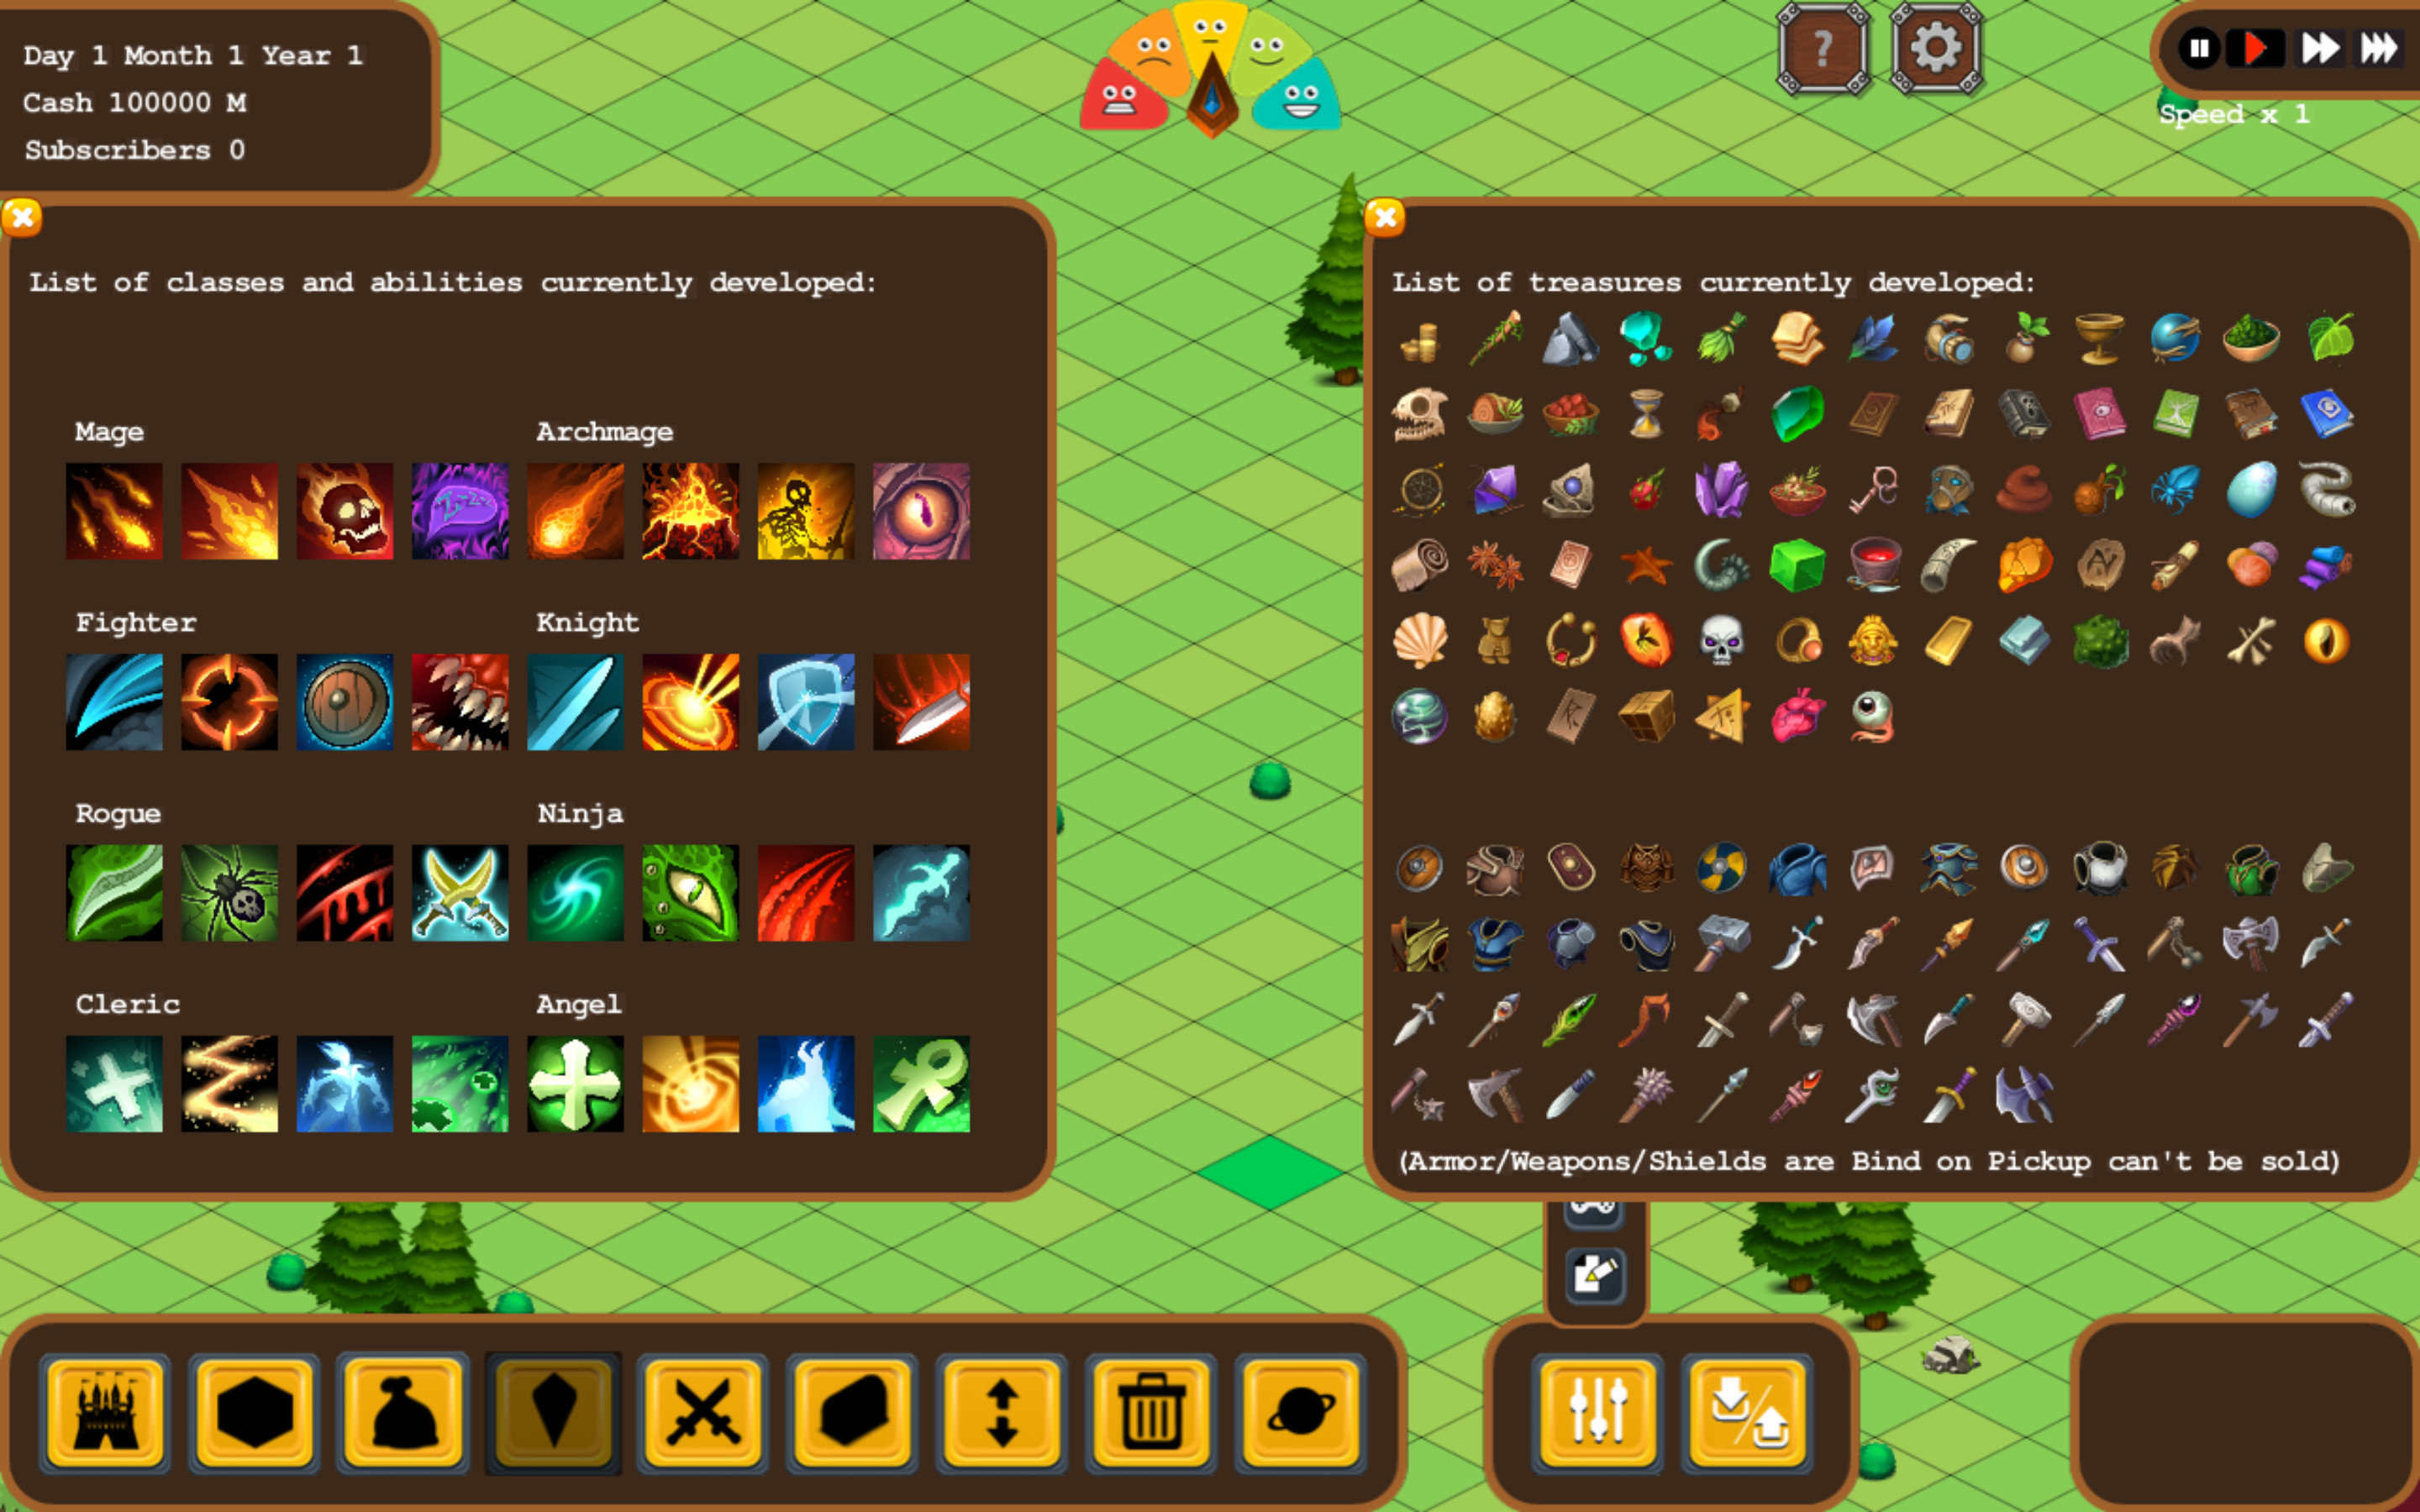 Fantasy World Online Tycoon screenshot